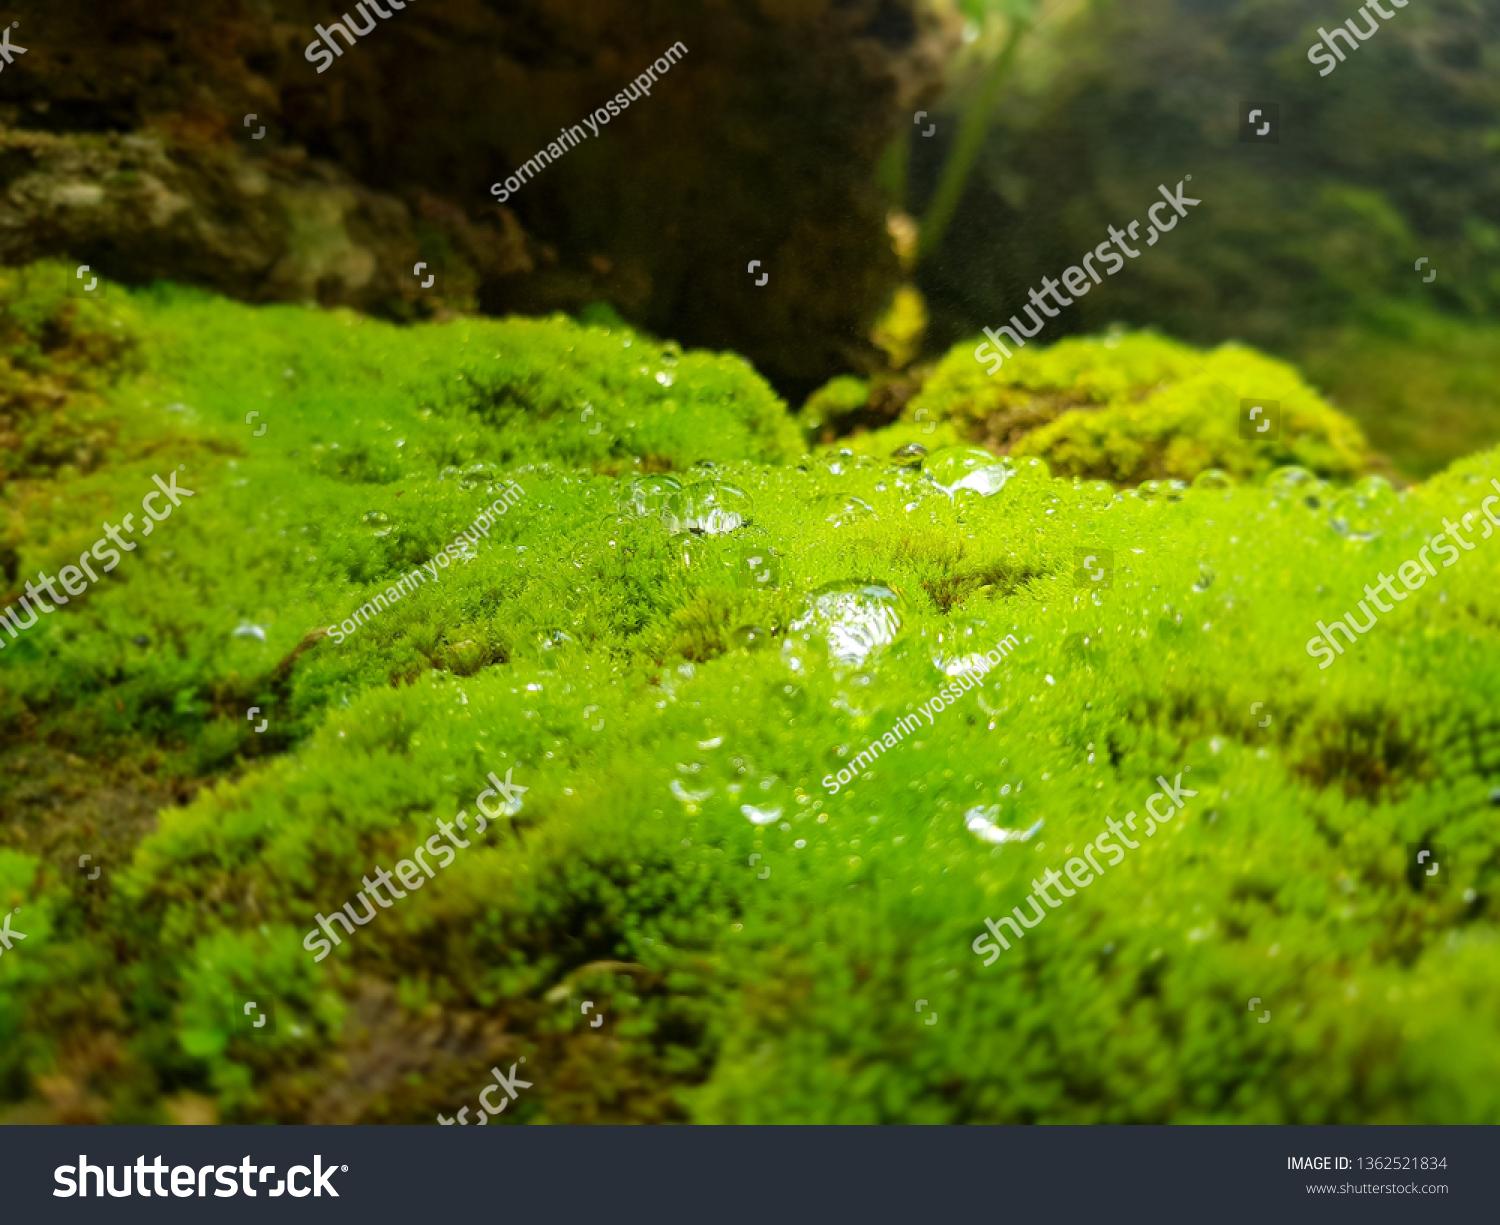 stock-photo-bryophyta-moss-plantae-1362521834.jpg